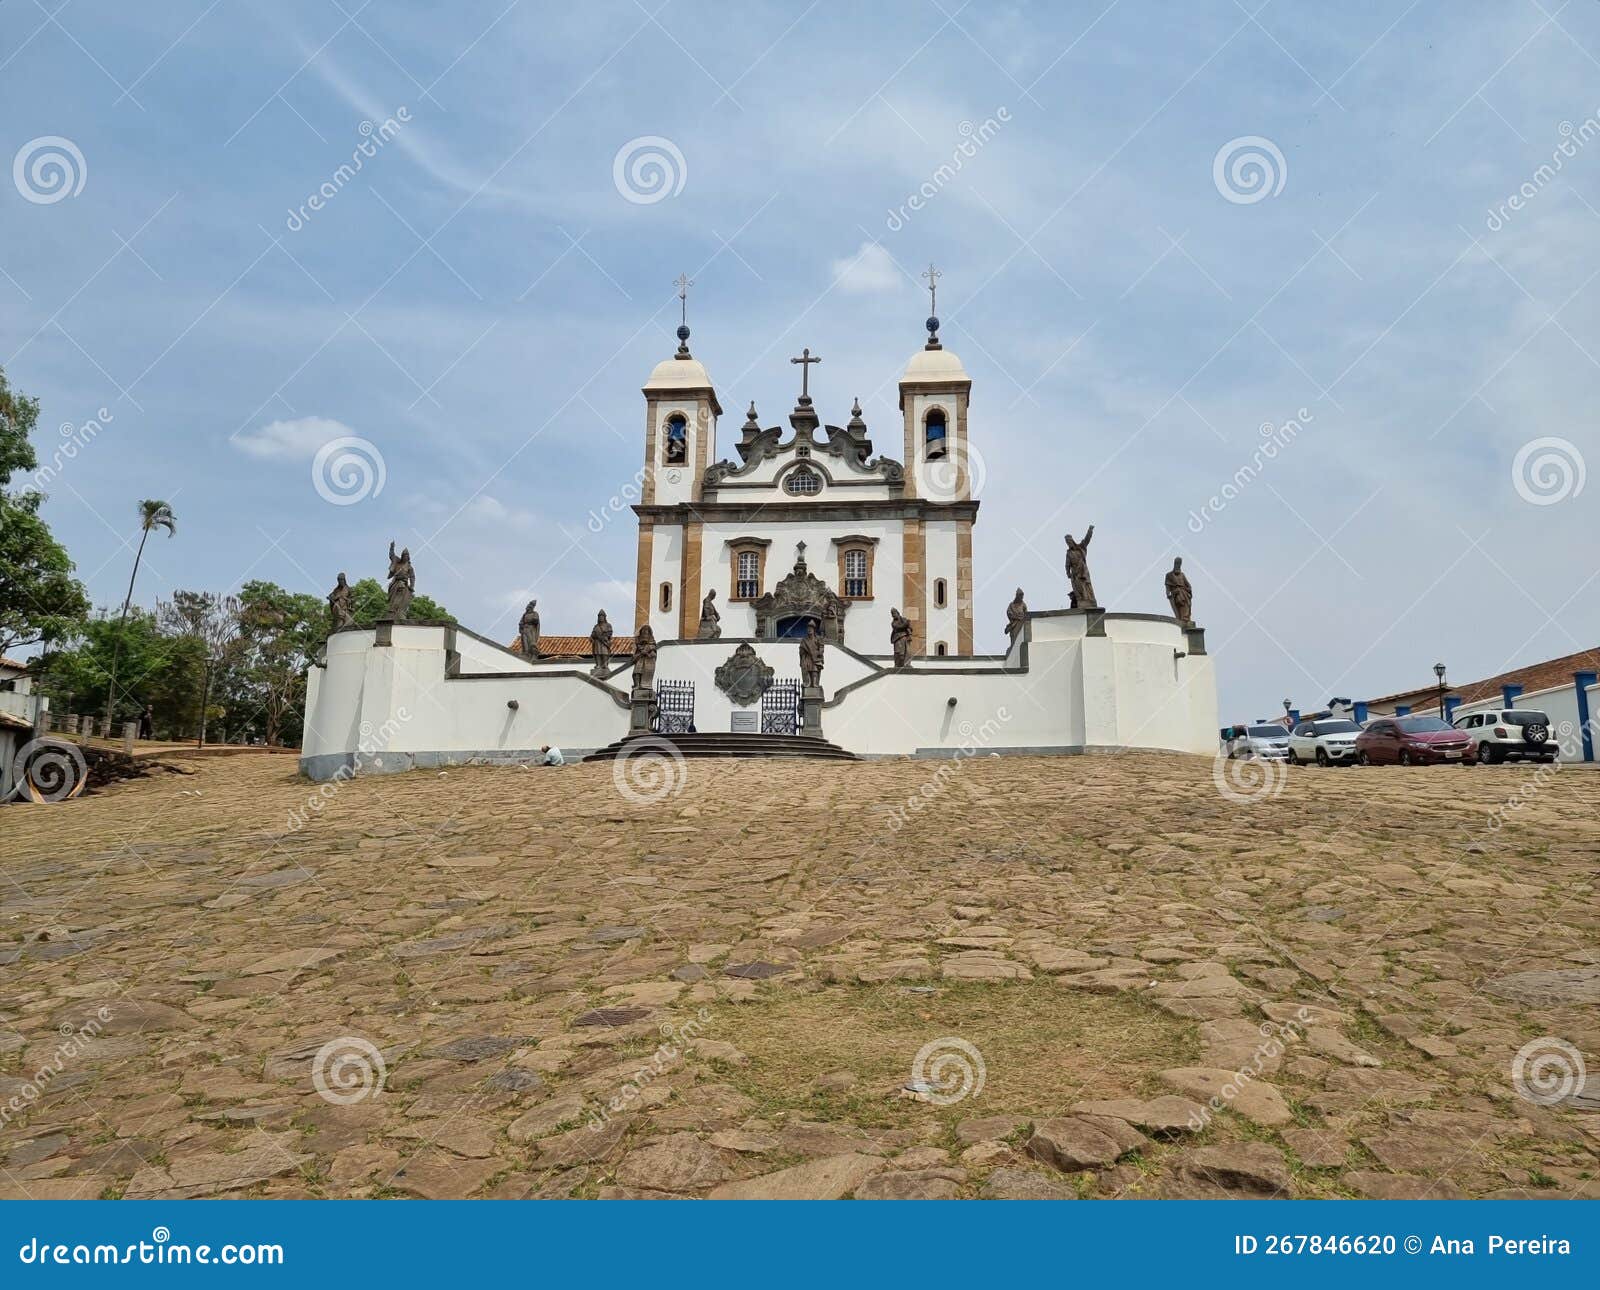 sanctuary of senhor bom jesus de matosinhos - world heritage